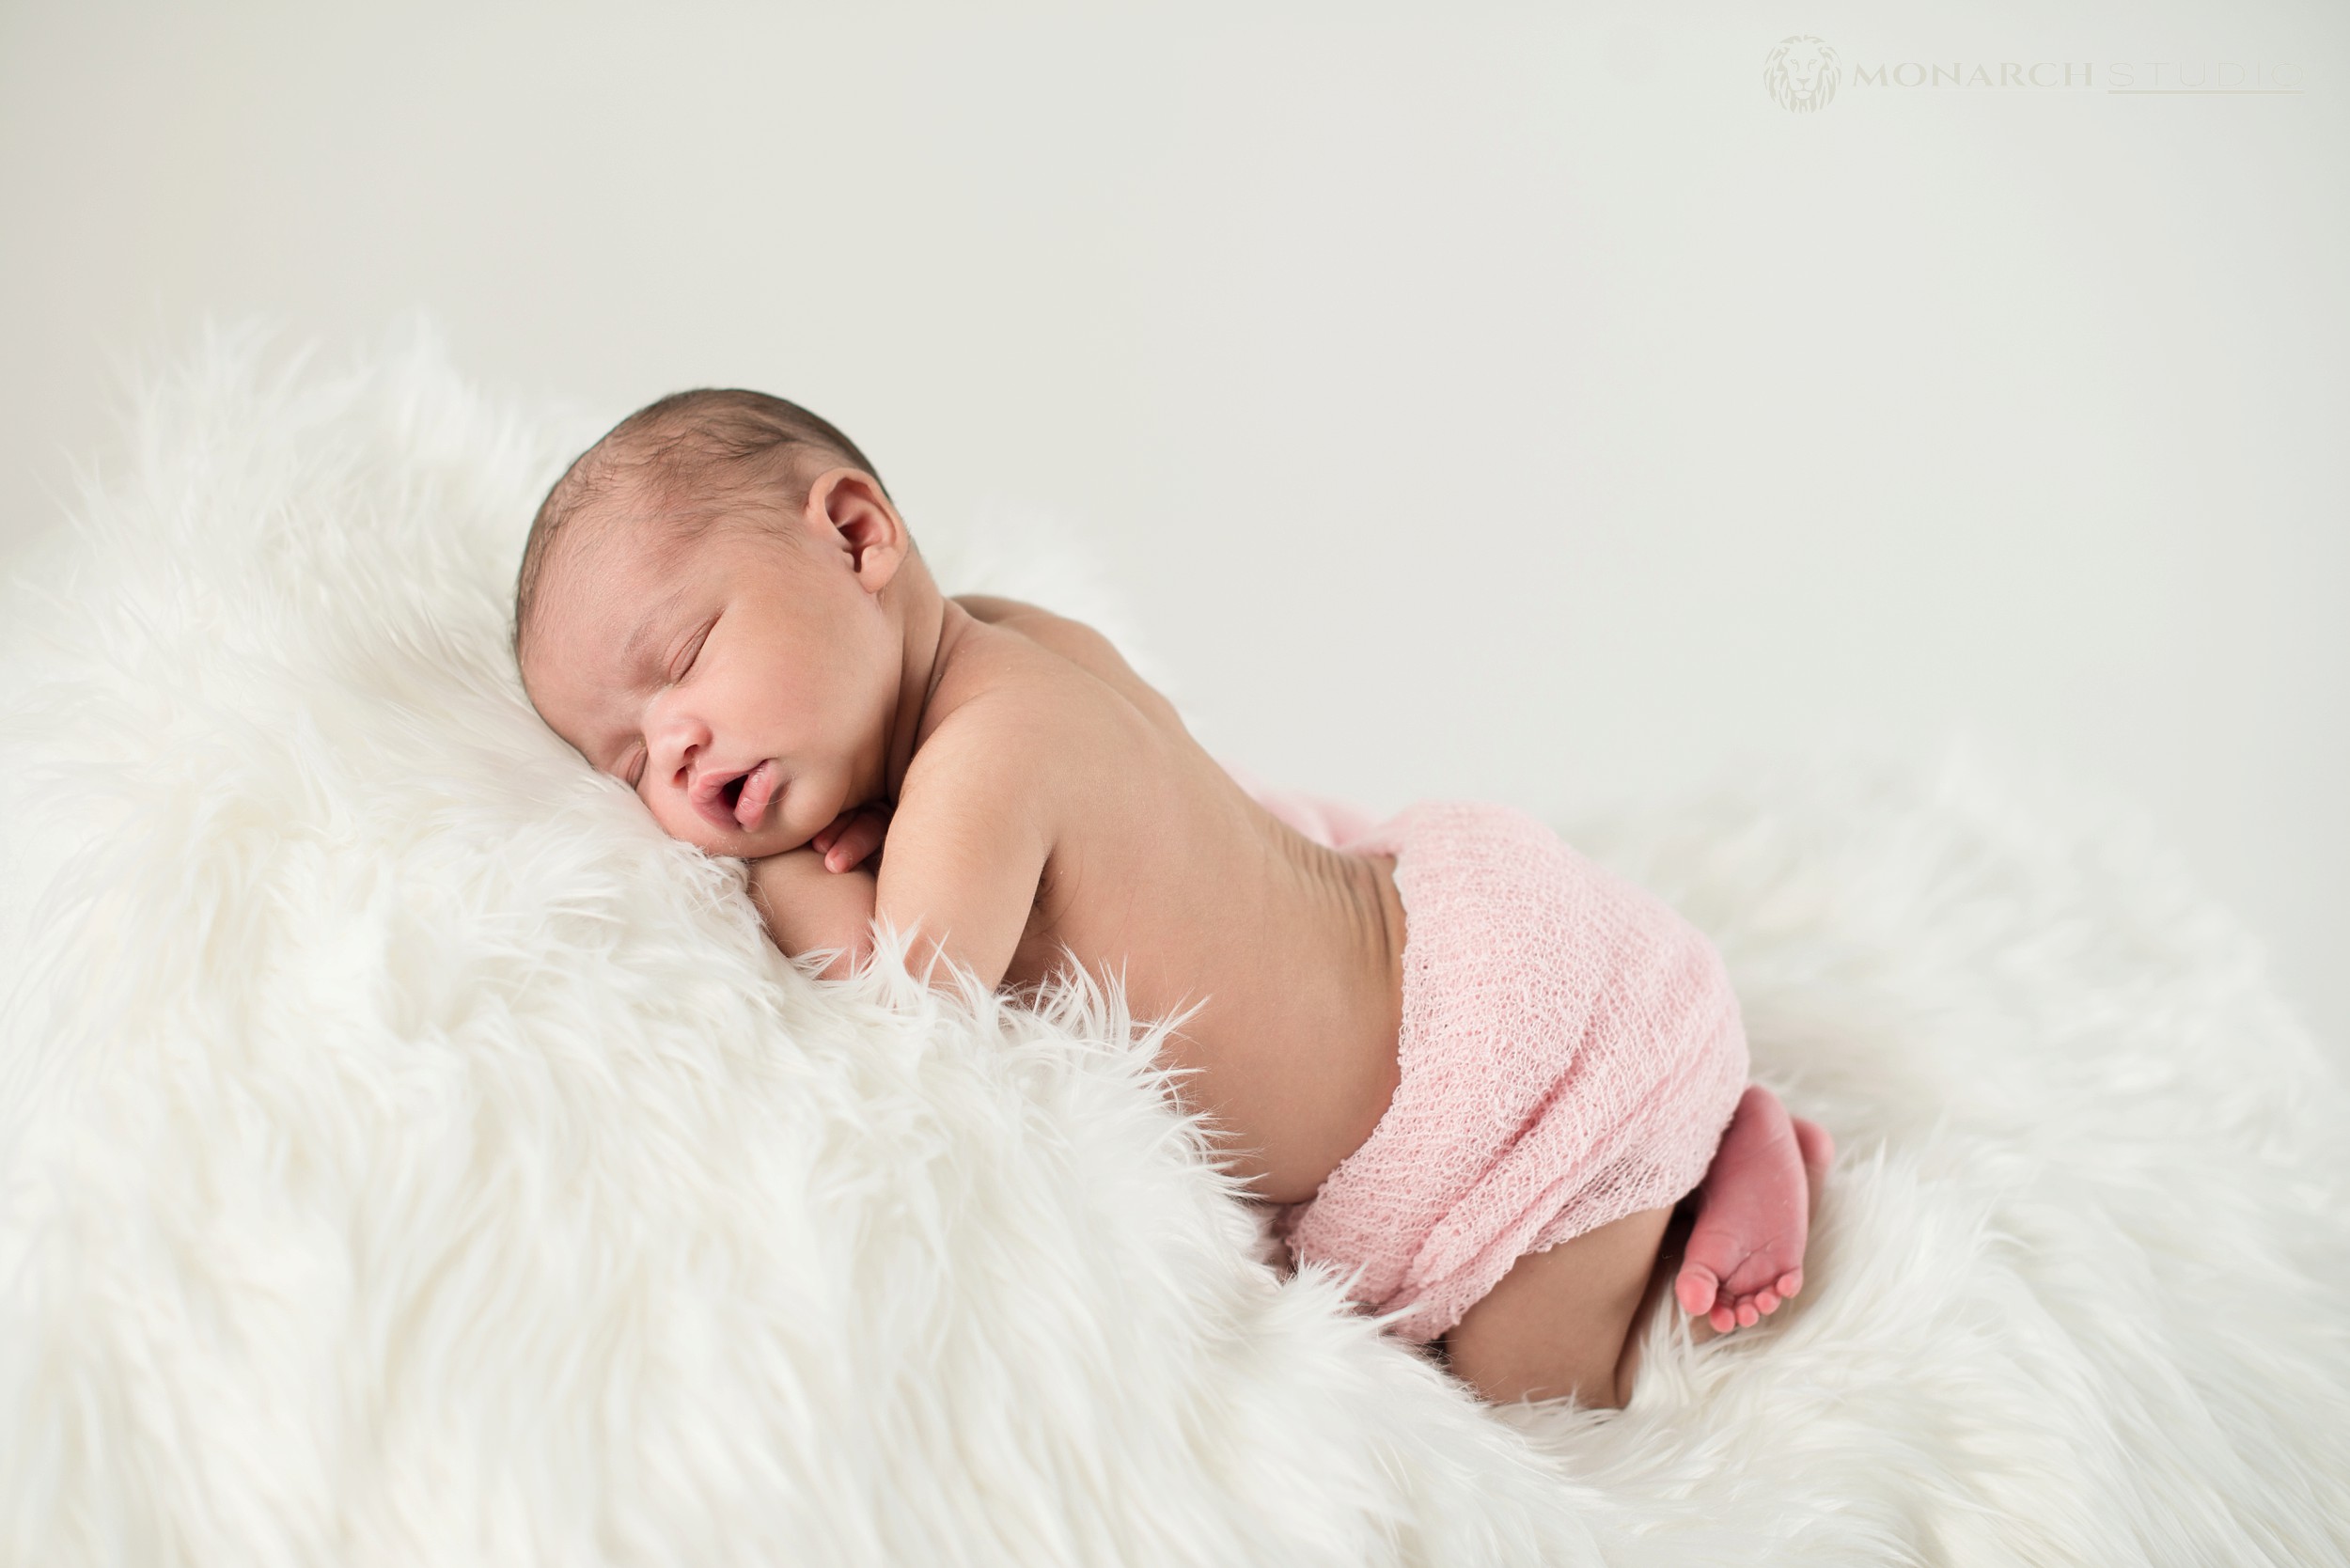 st.-augustine-newborn-photographer-Posed-Baby-Girl-Studio-Session_0006.jpg